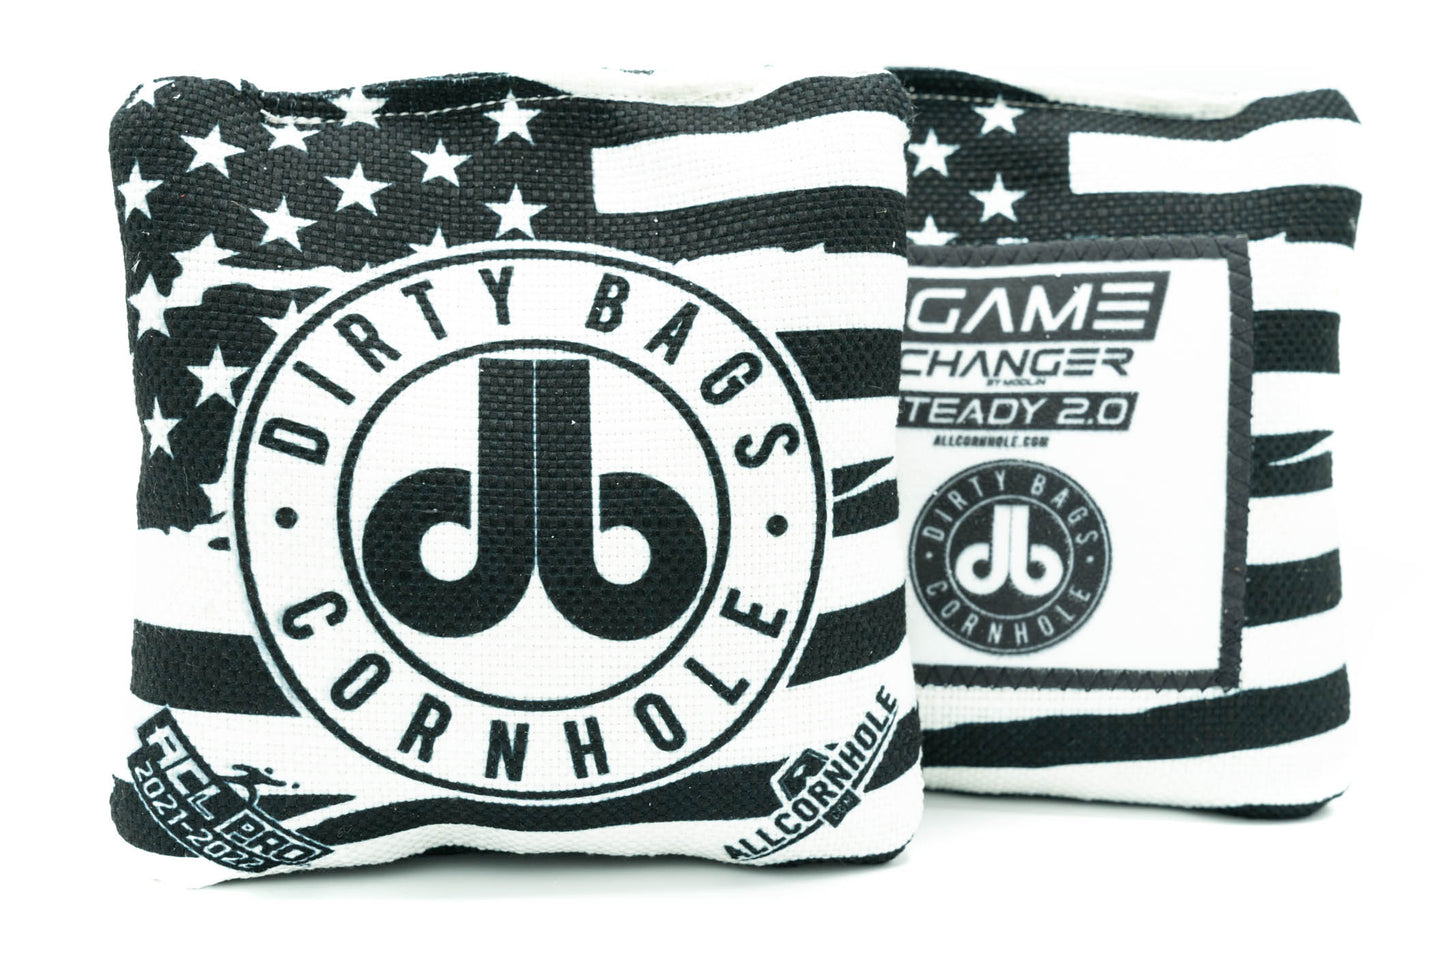 Game Changer Steady 2.0 - db USA Flag Edition (Set of 4)